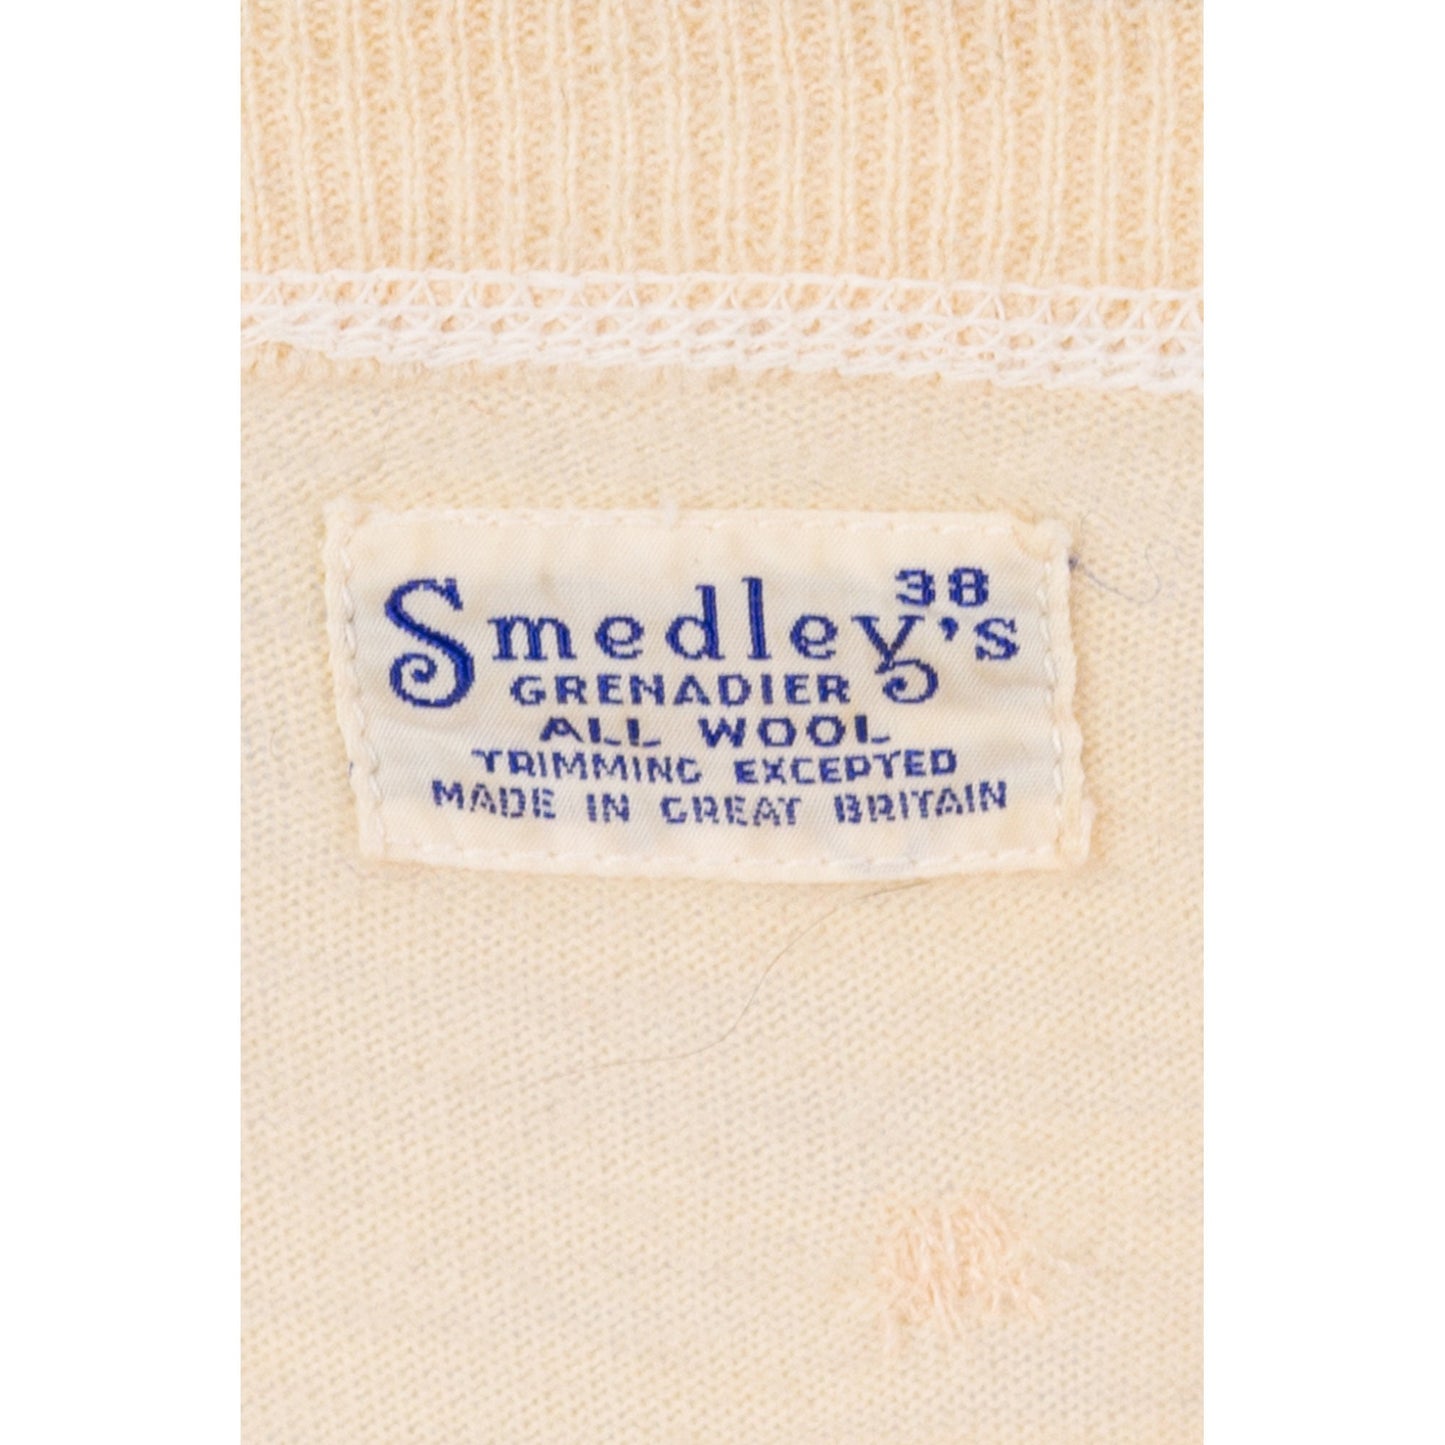 1950s Cream Wool Knit Top - Medium to Large 